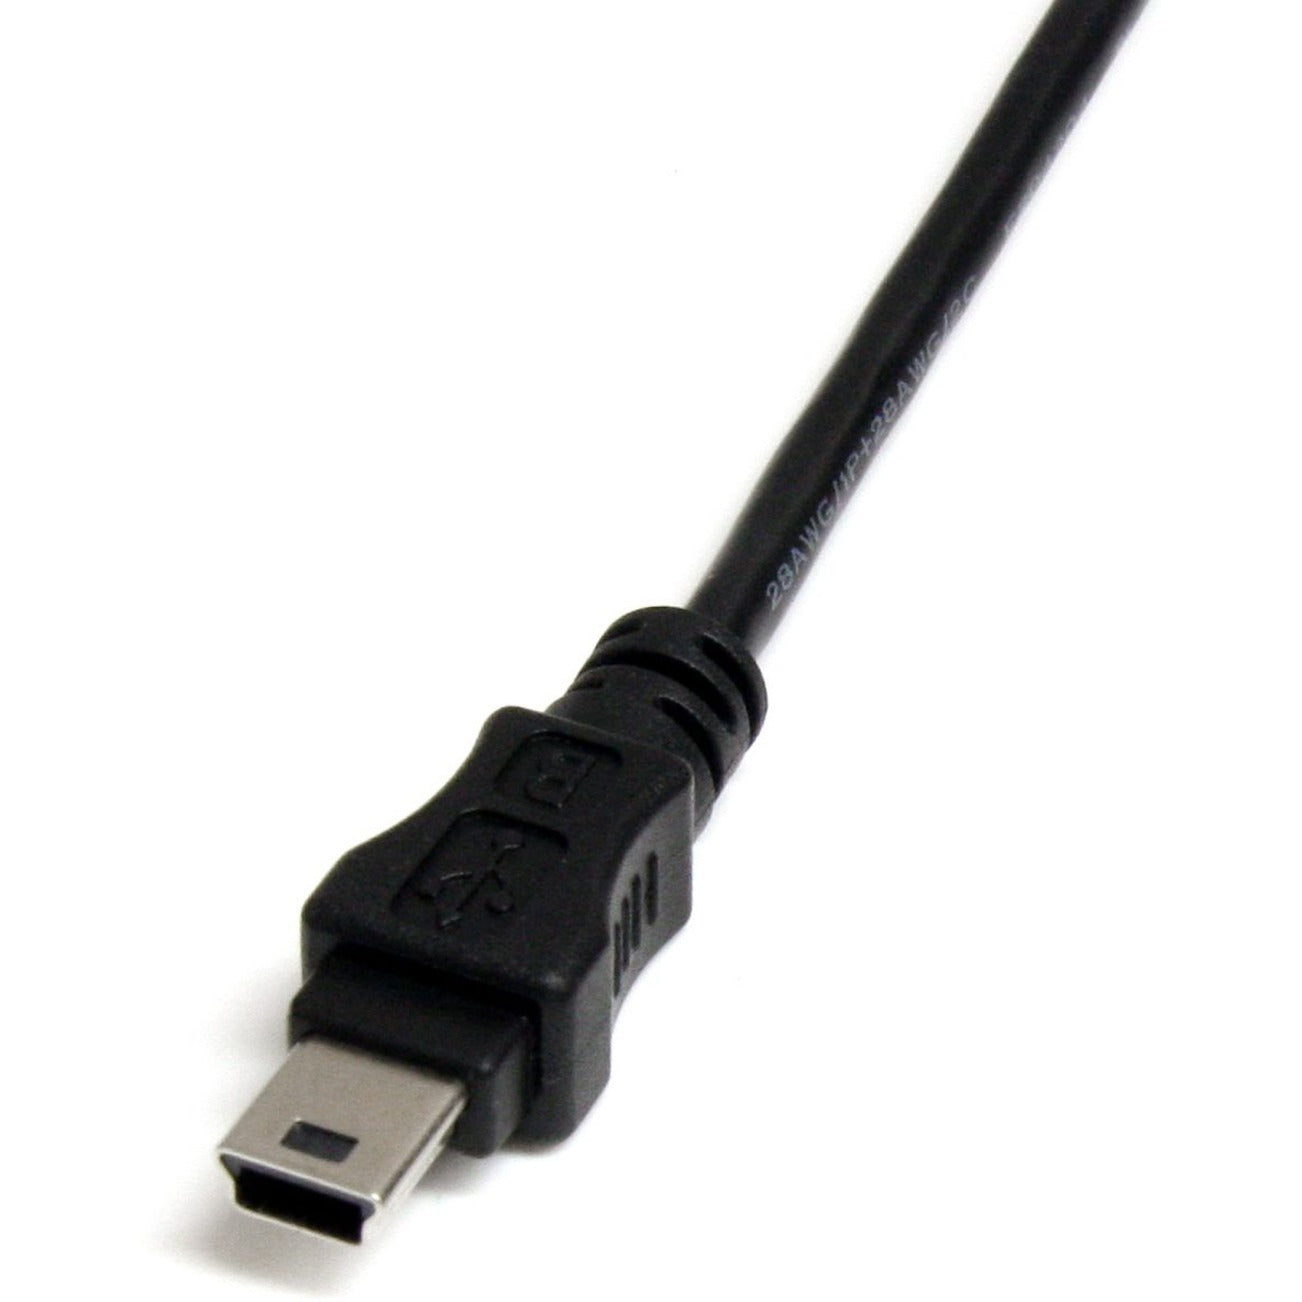 StarTech.com USBMUSBFM1 1 ft Mini USB 2.0 Cable, USB A to Mini B F/M, Data Transfer Cable